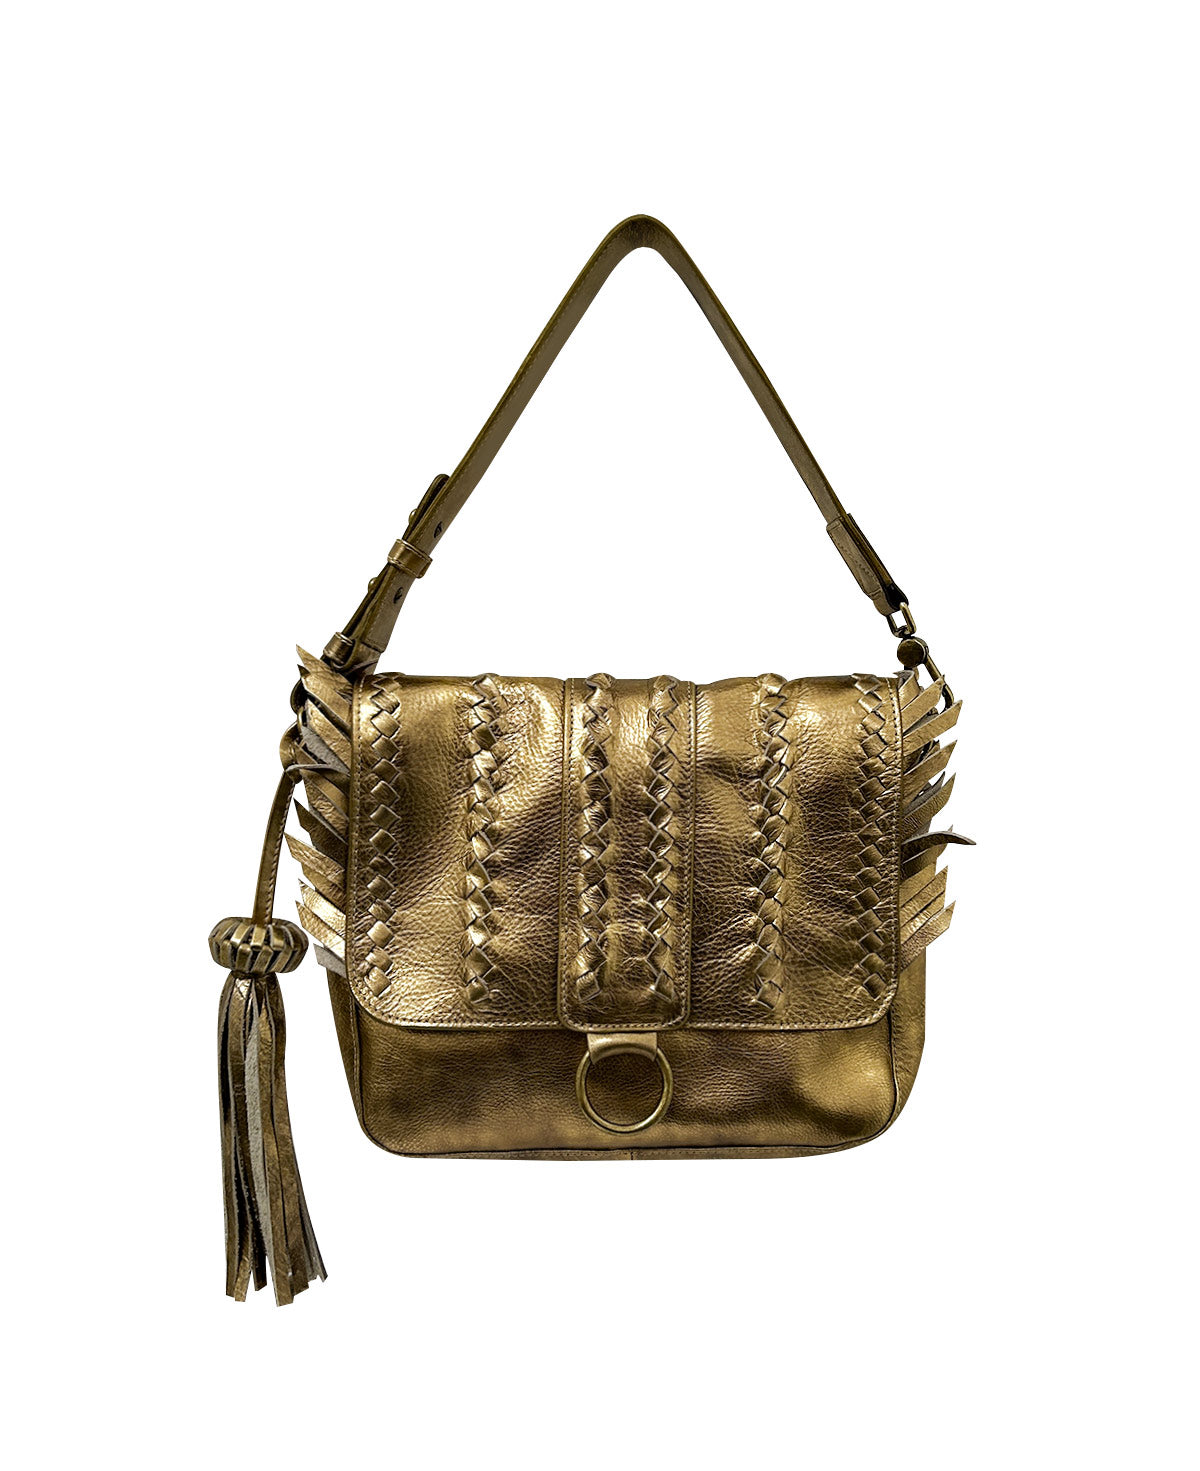 Metallic Gold SENECA Leather Bag with Braids & Frings Details